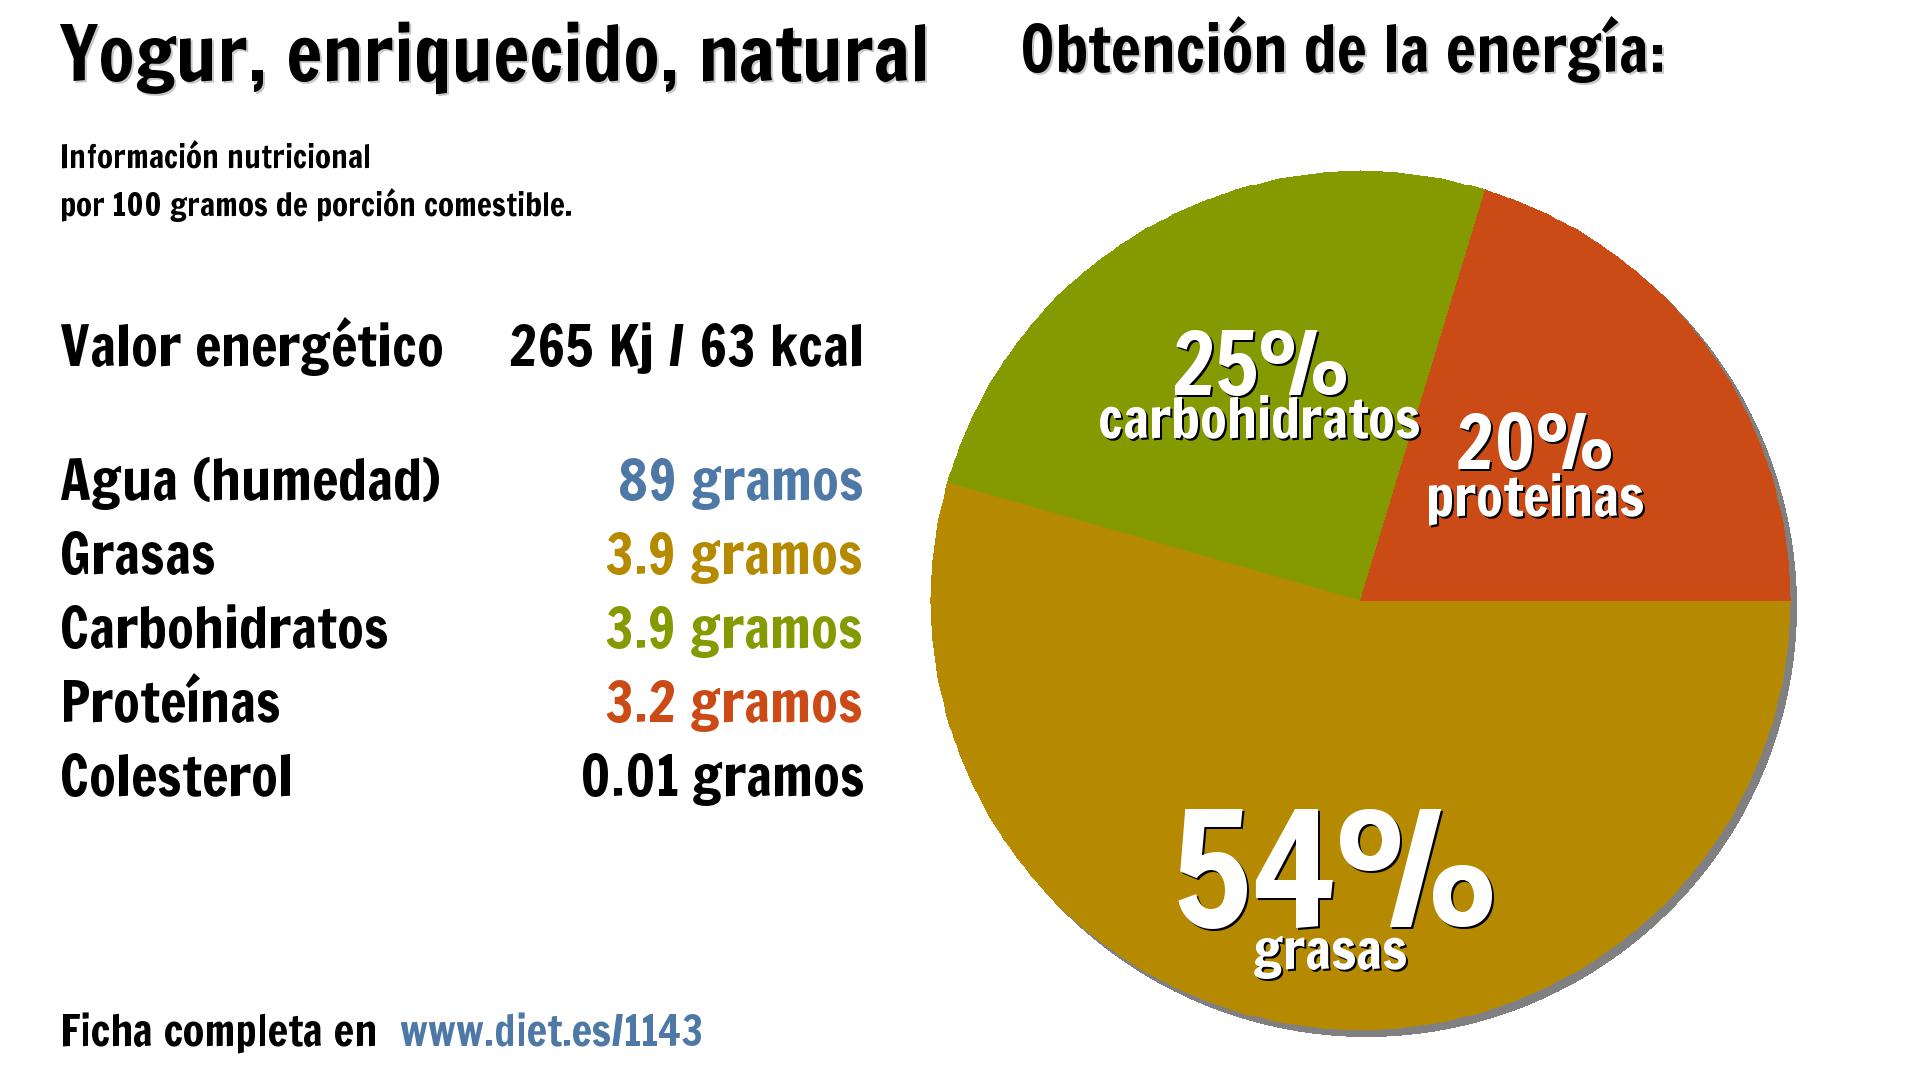 Yogur, enriquecido, natural: energía 265 Kj, agua 89 g., grasas 4 g., carbohidratos 4 g. y proteínas 3 g.